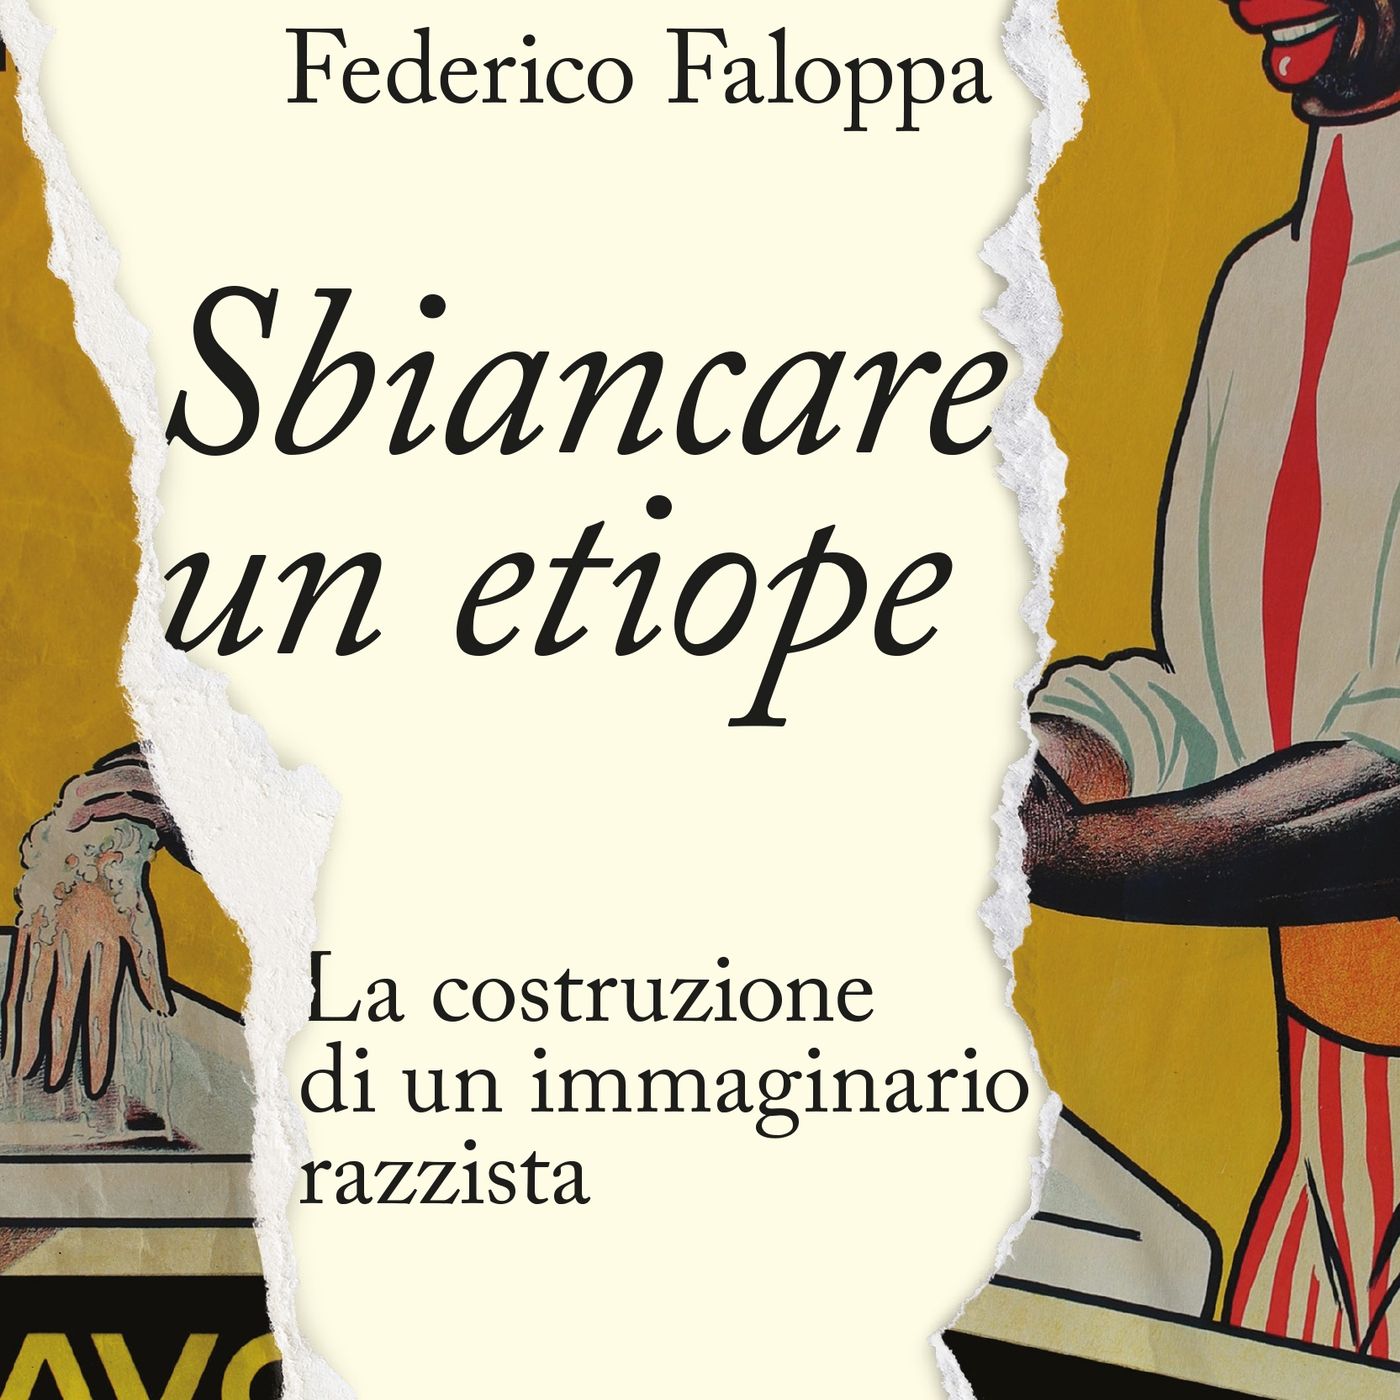 Federico Faloppa "Sbiancare un etiope"